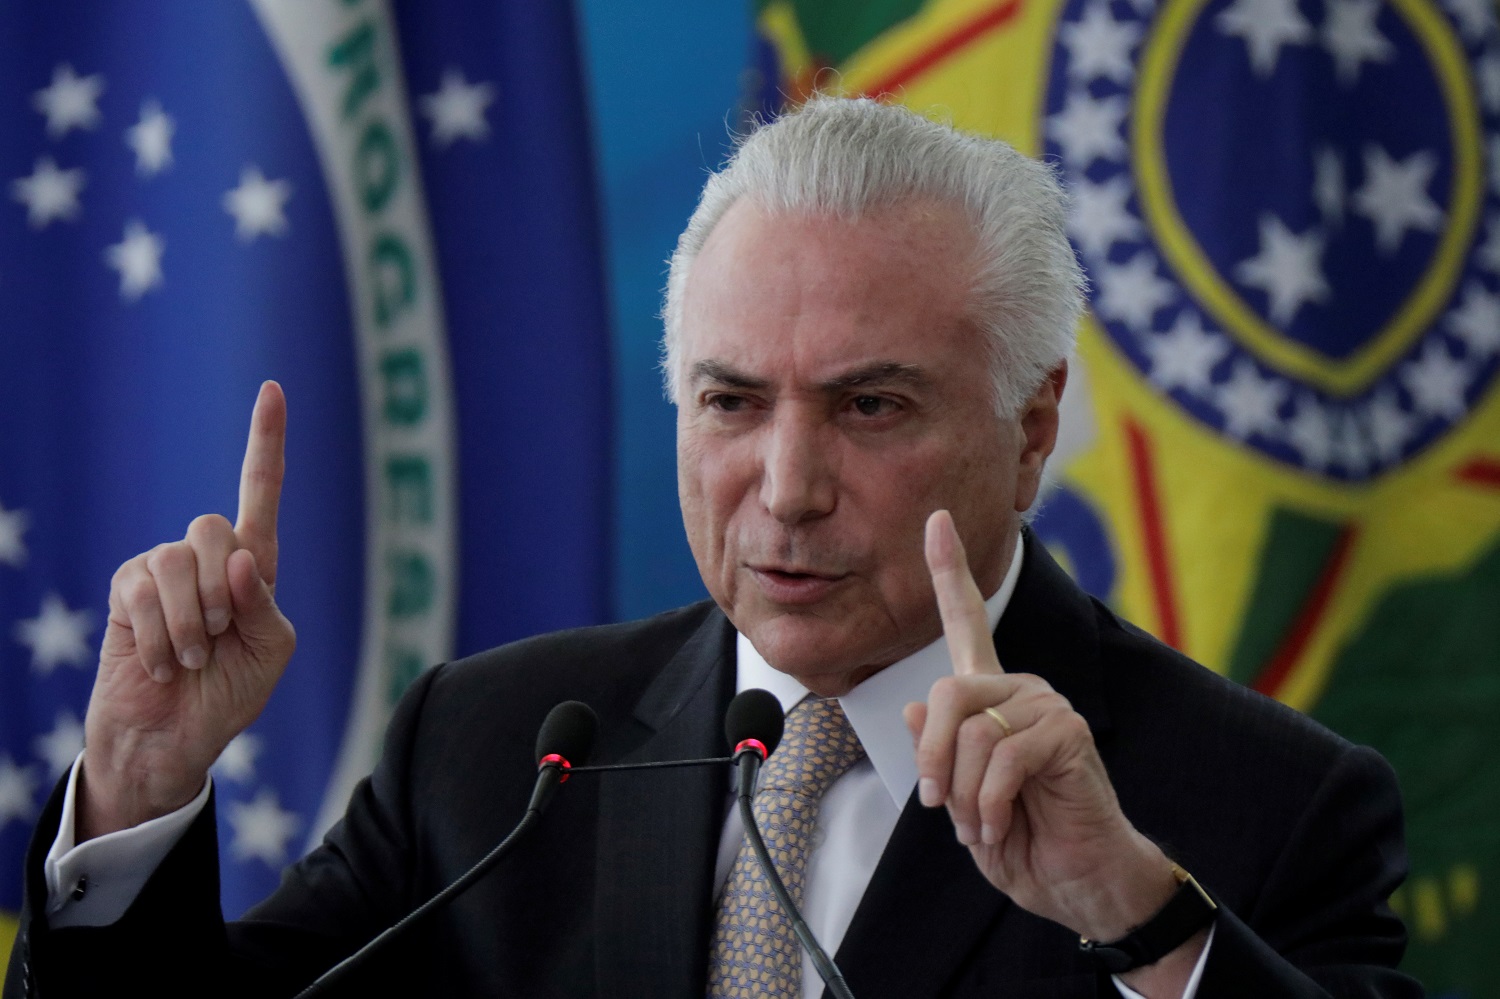 Juez en Brasil absolvió al expresidente Michael Temer de un caso de corrupción